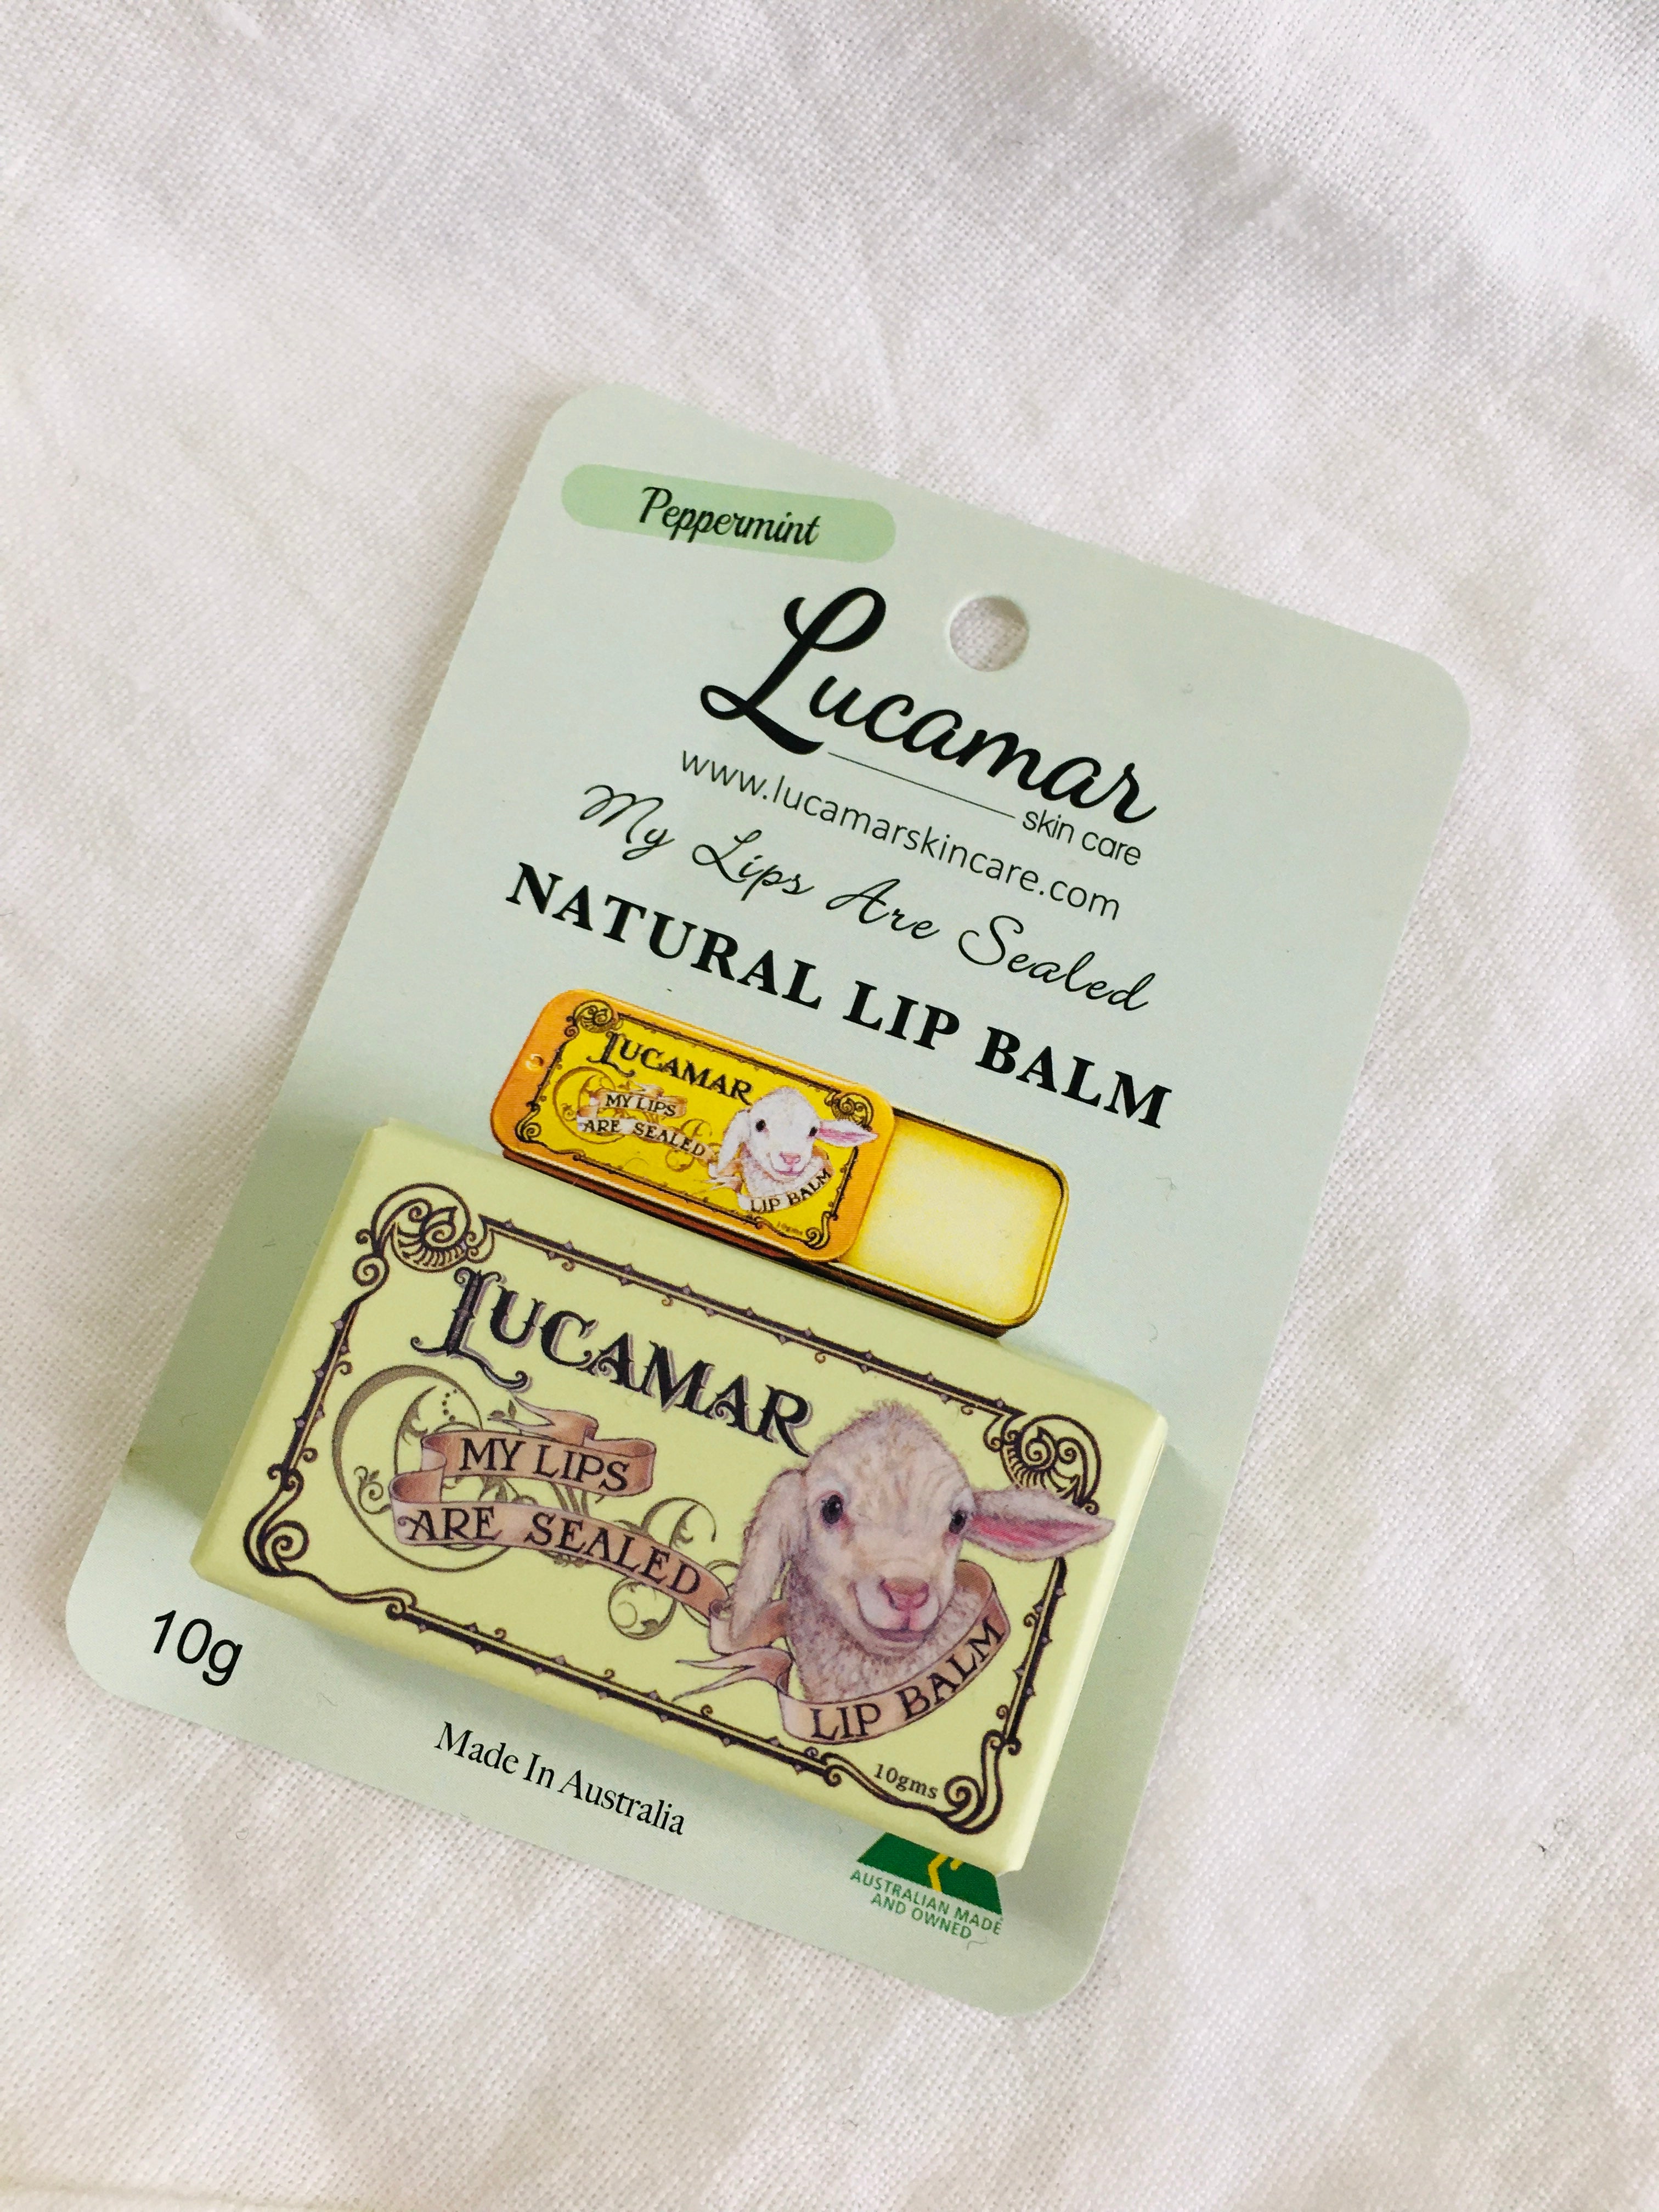 Lucamar - Natural Lip Balms Skin Care Lucamar Skin Care Peppermint 